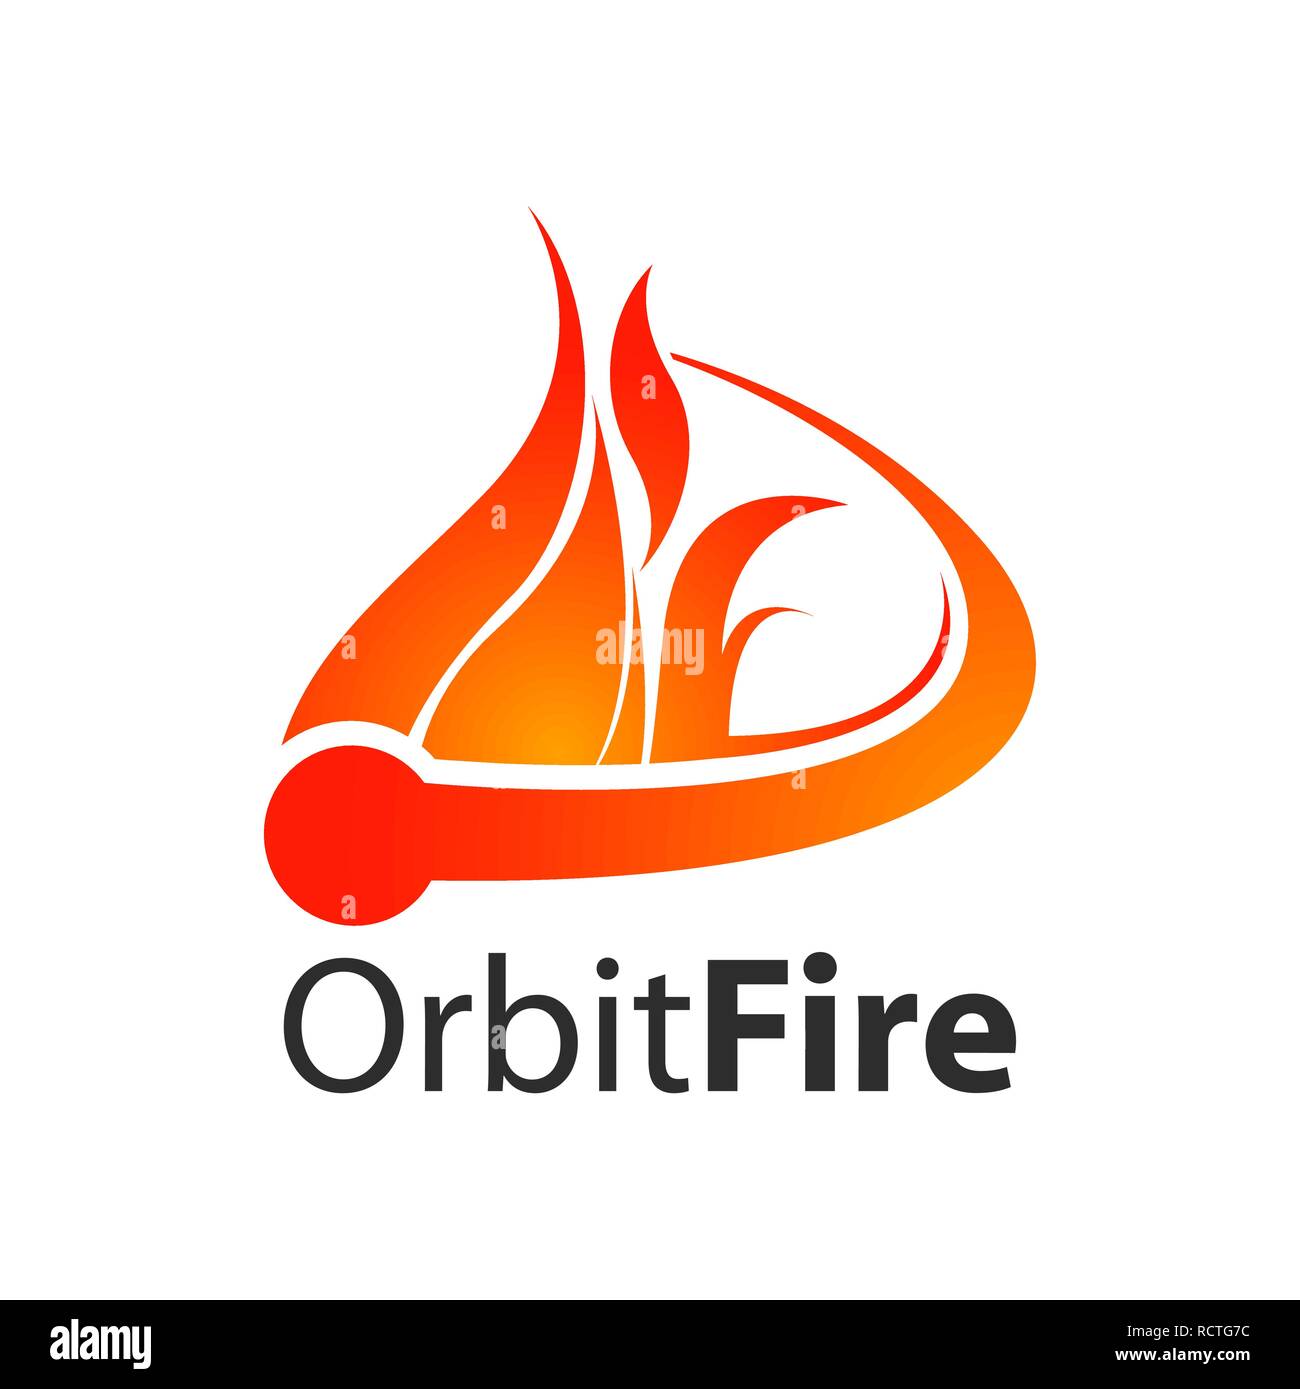 Orbit fire logo concept design. Symbol graphic template element vector Stock Vector